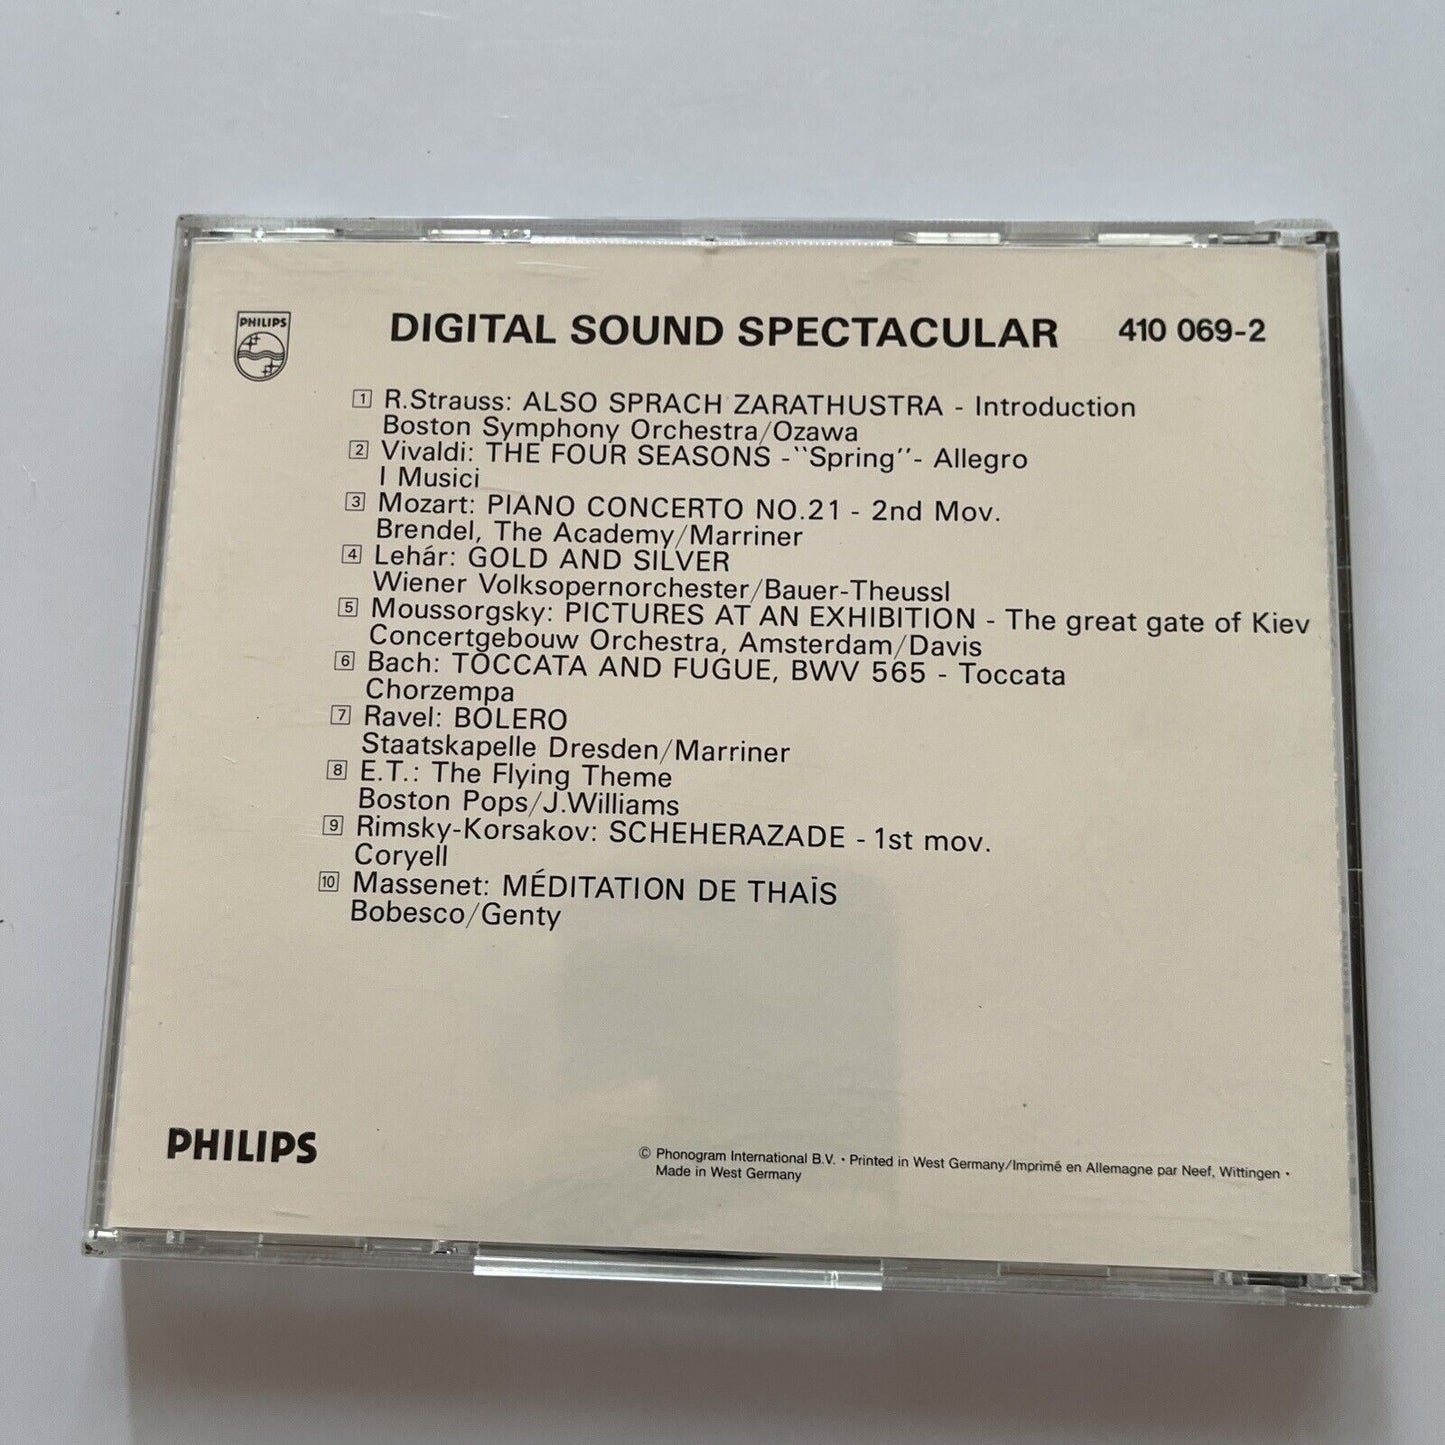 Philips - Digital Sound Spectacular (CD, 1982) 410 069-2